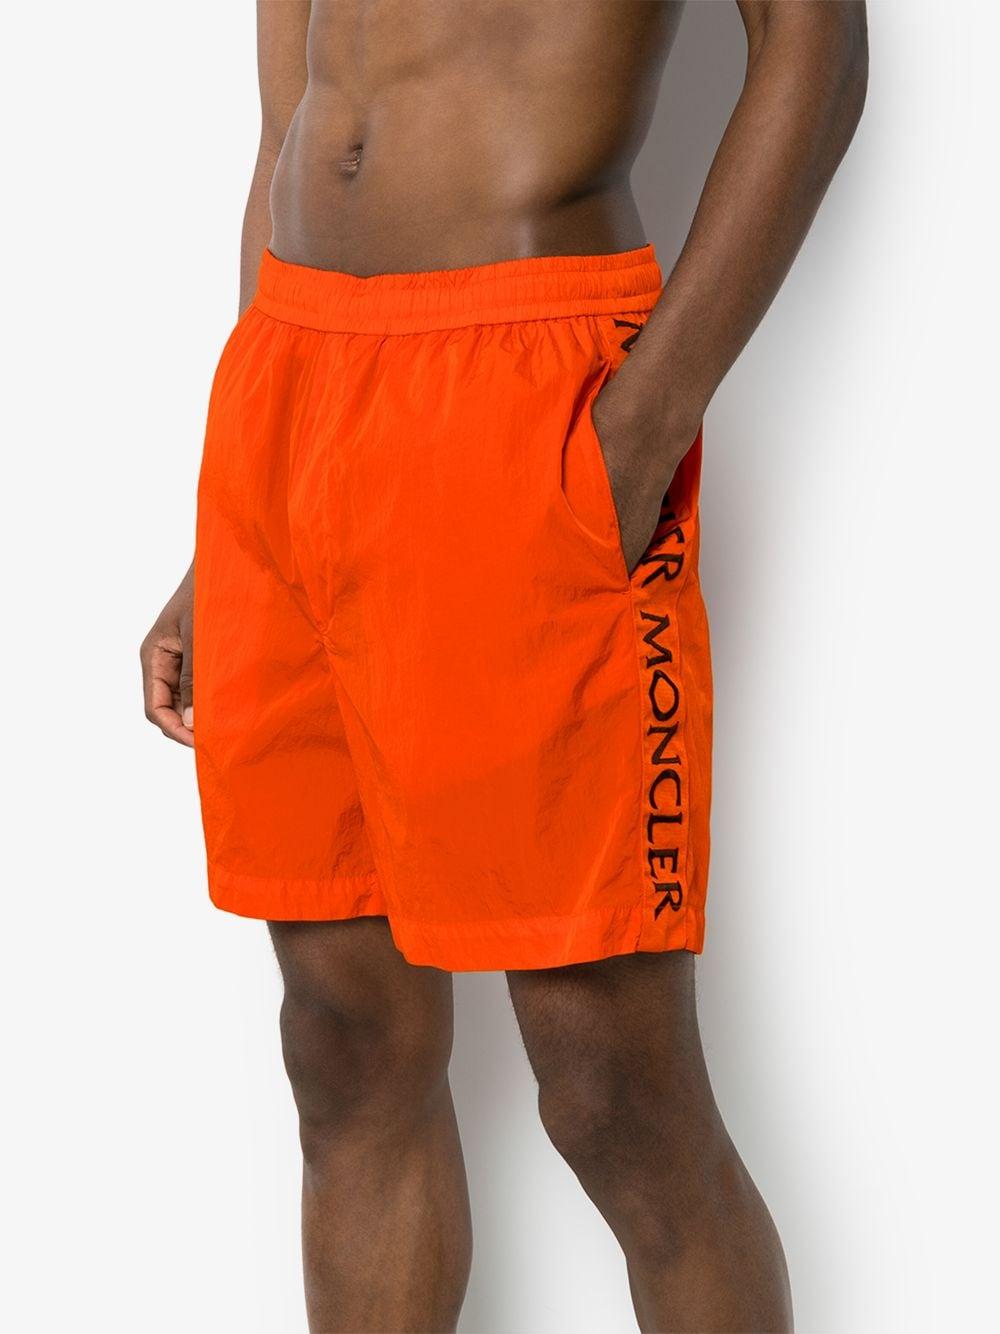 Moncler Bermuda Swim Shorts in Orange for Men - Lyst